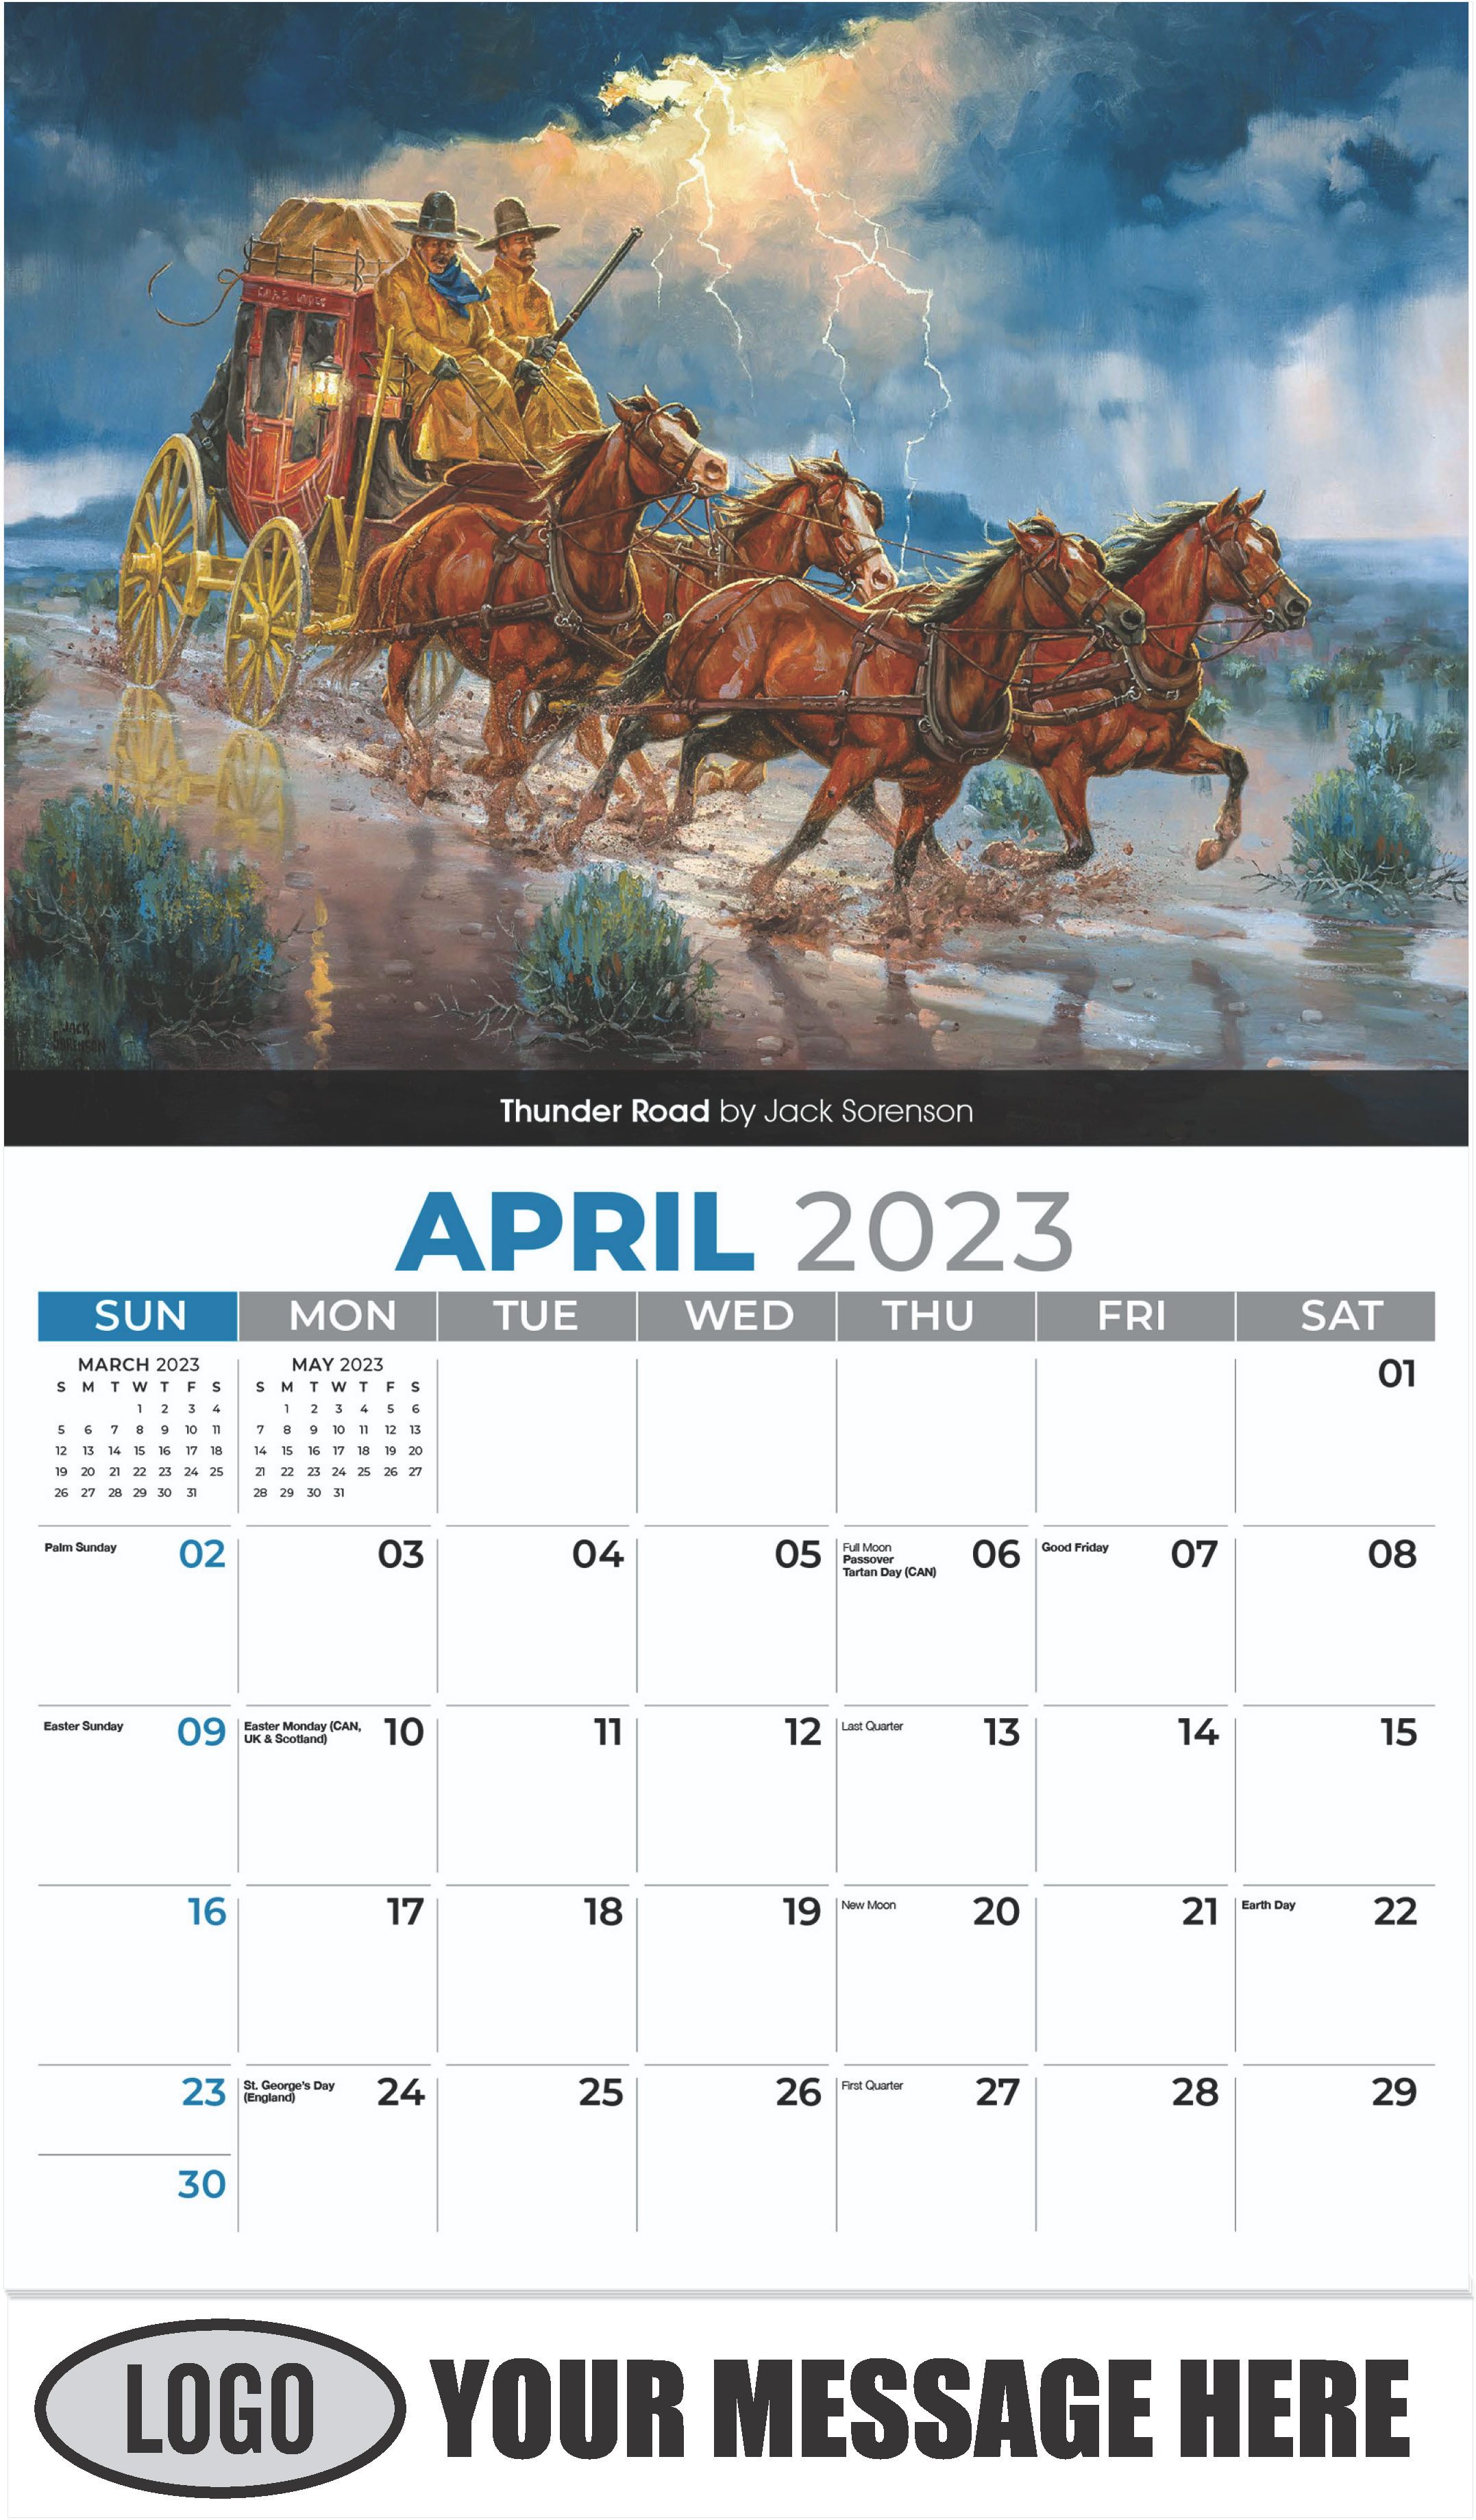 Thunder Road by Jack Sorenson - April - Spirit of the West 2023 Promotional Calendar